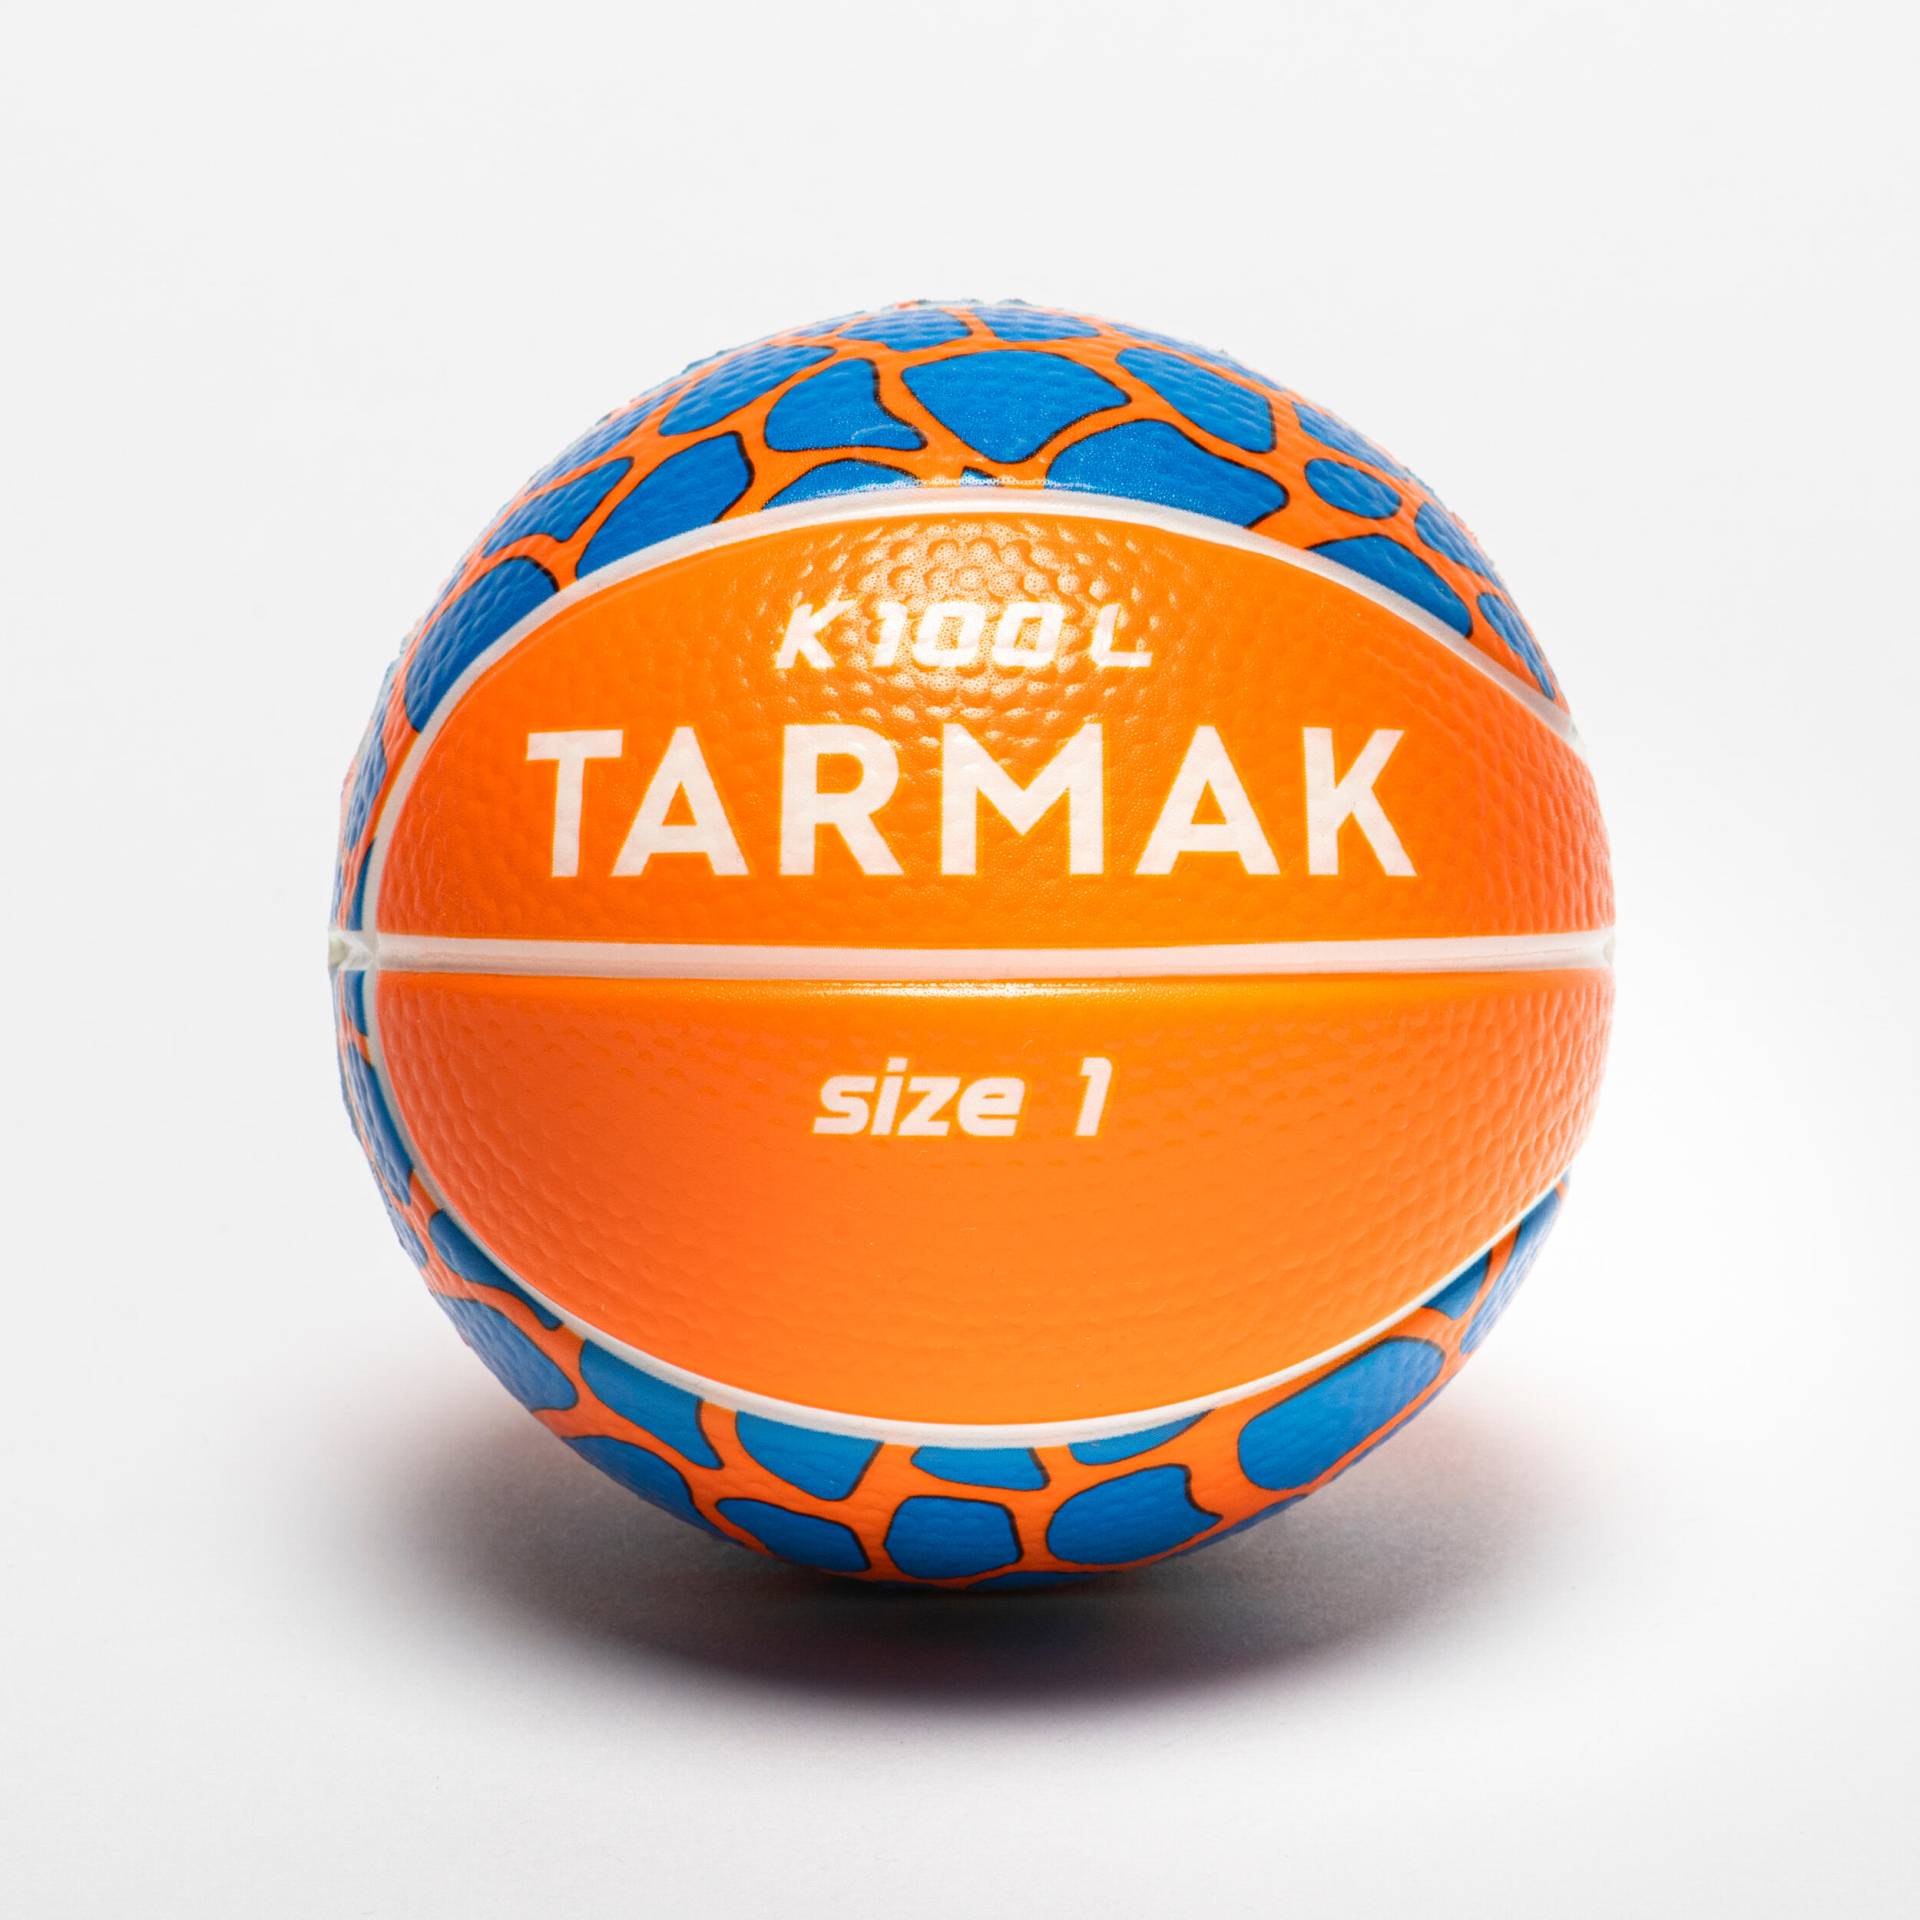 Kinder Basketball Grösse 1 Schaumstoff - K100 Mini Kinder von TARMAK